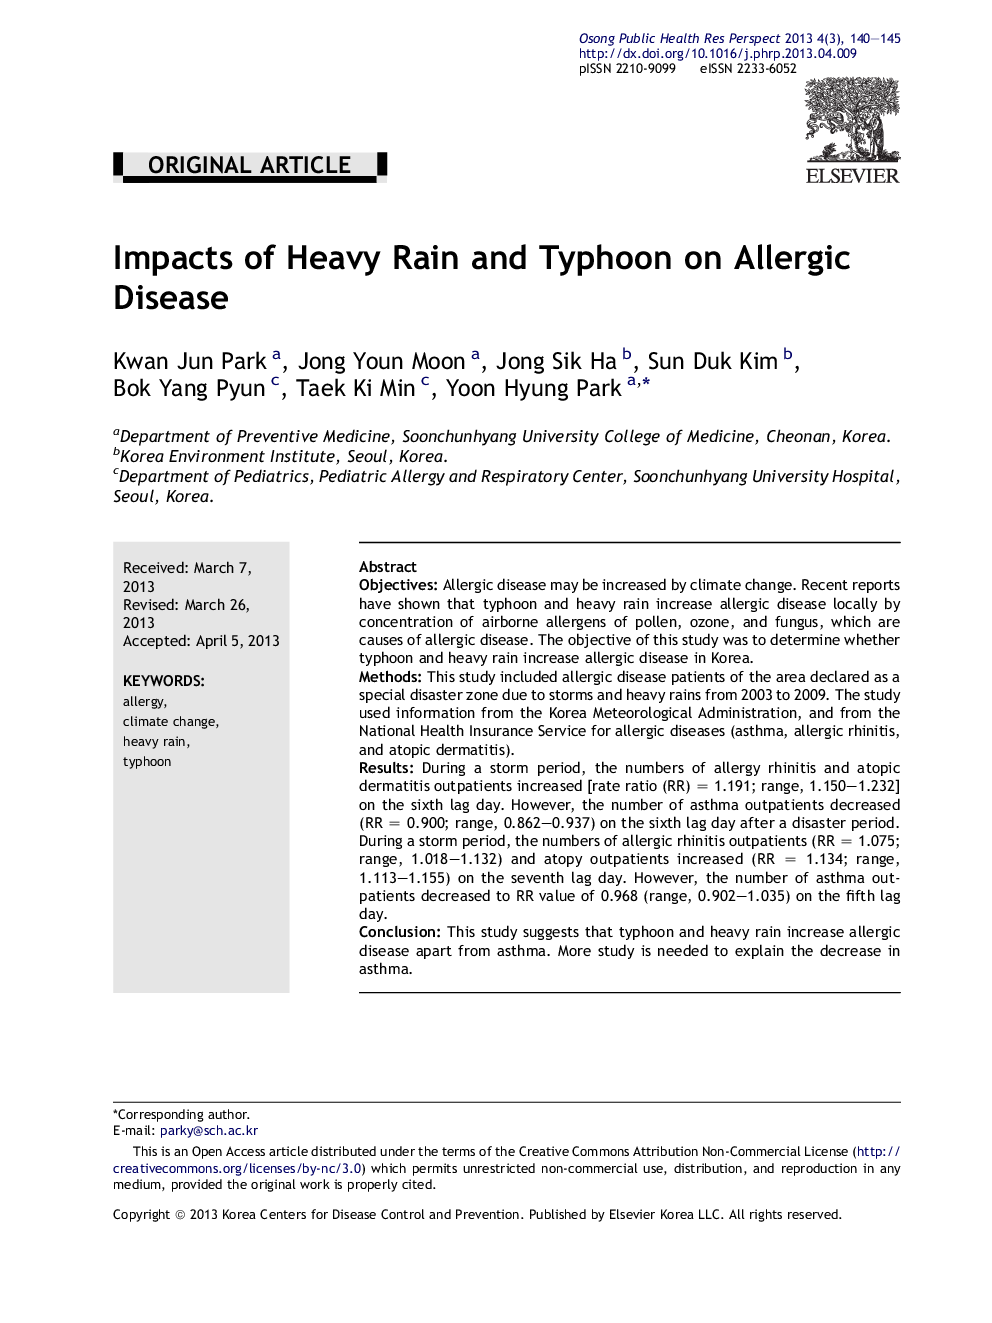 Impacts of Heavy Rain and Typhoon on Allergic Disease 